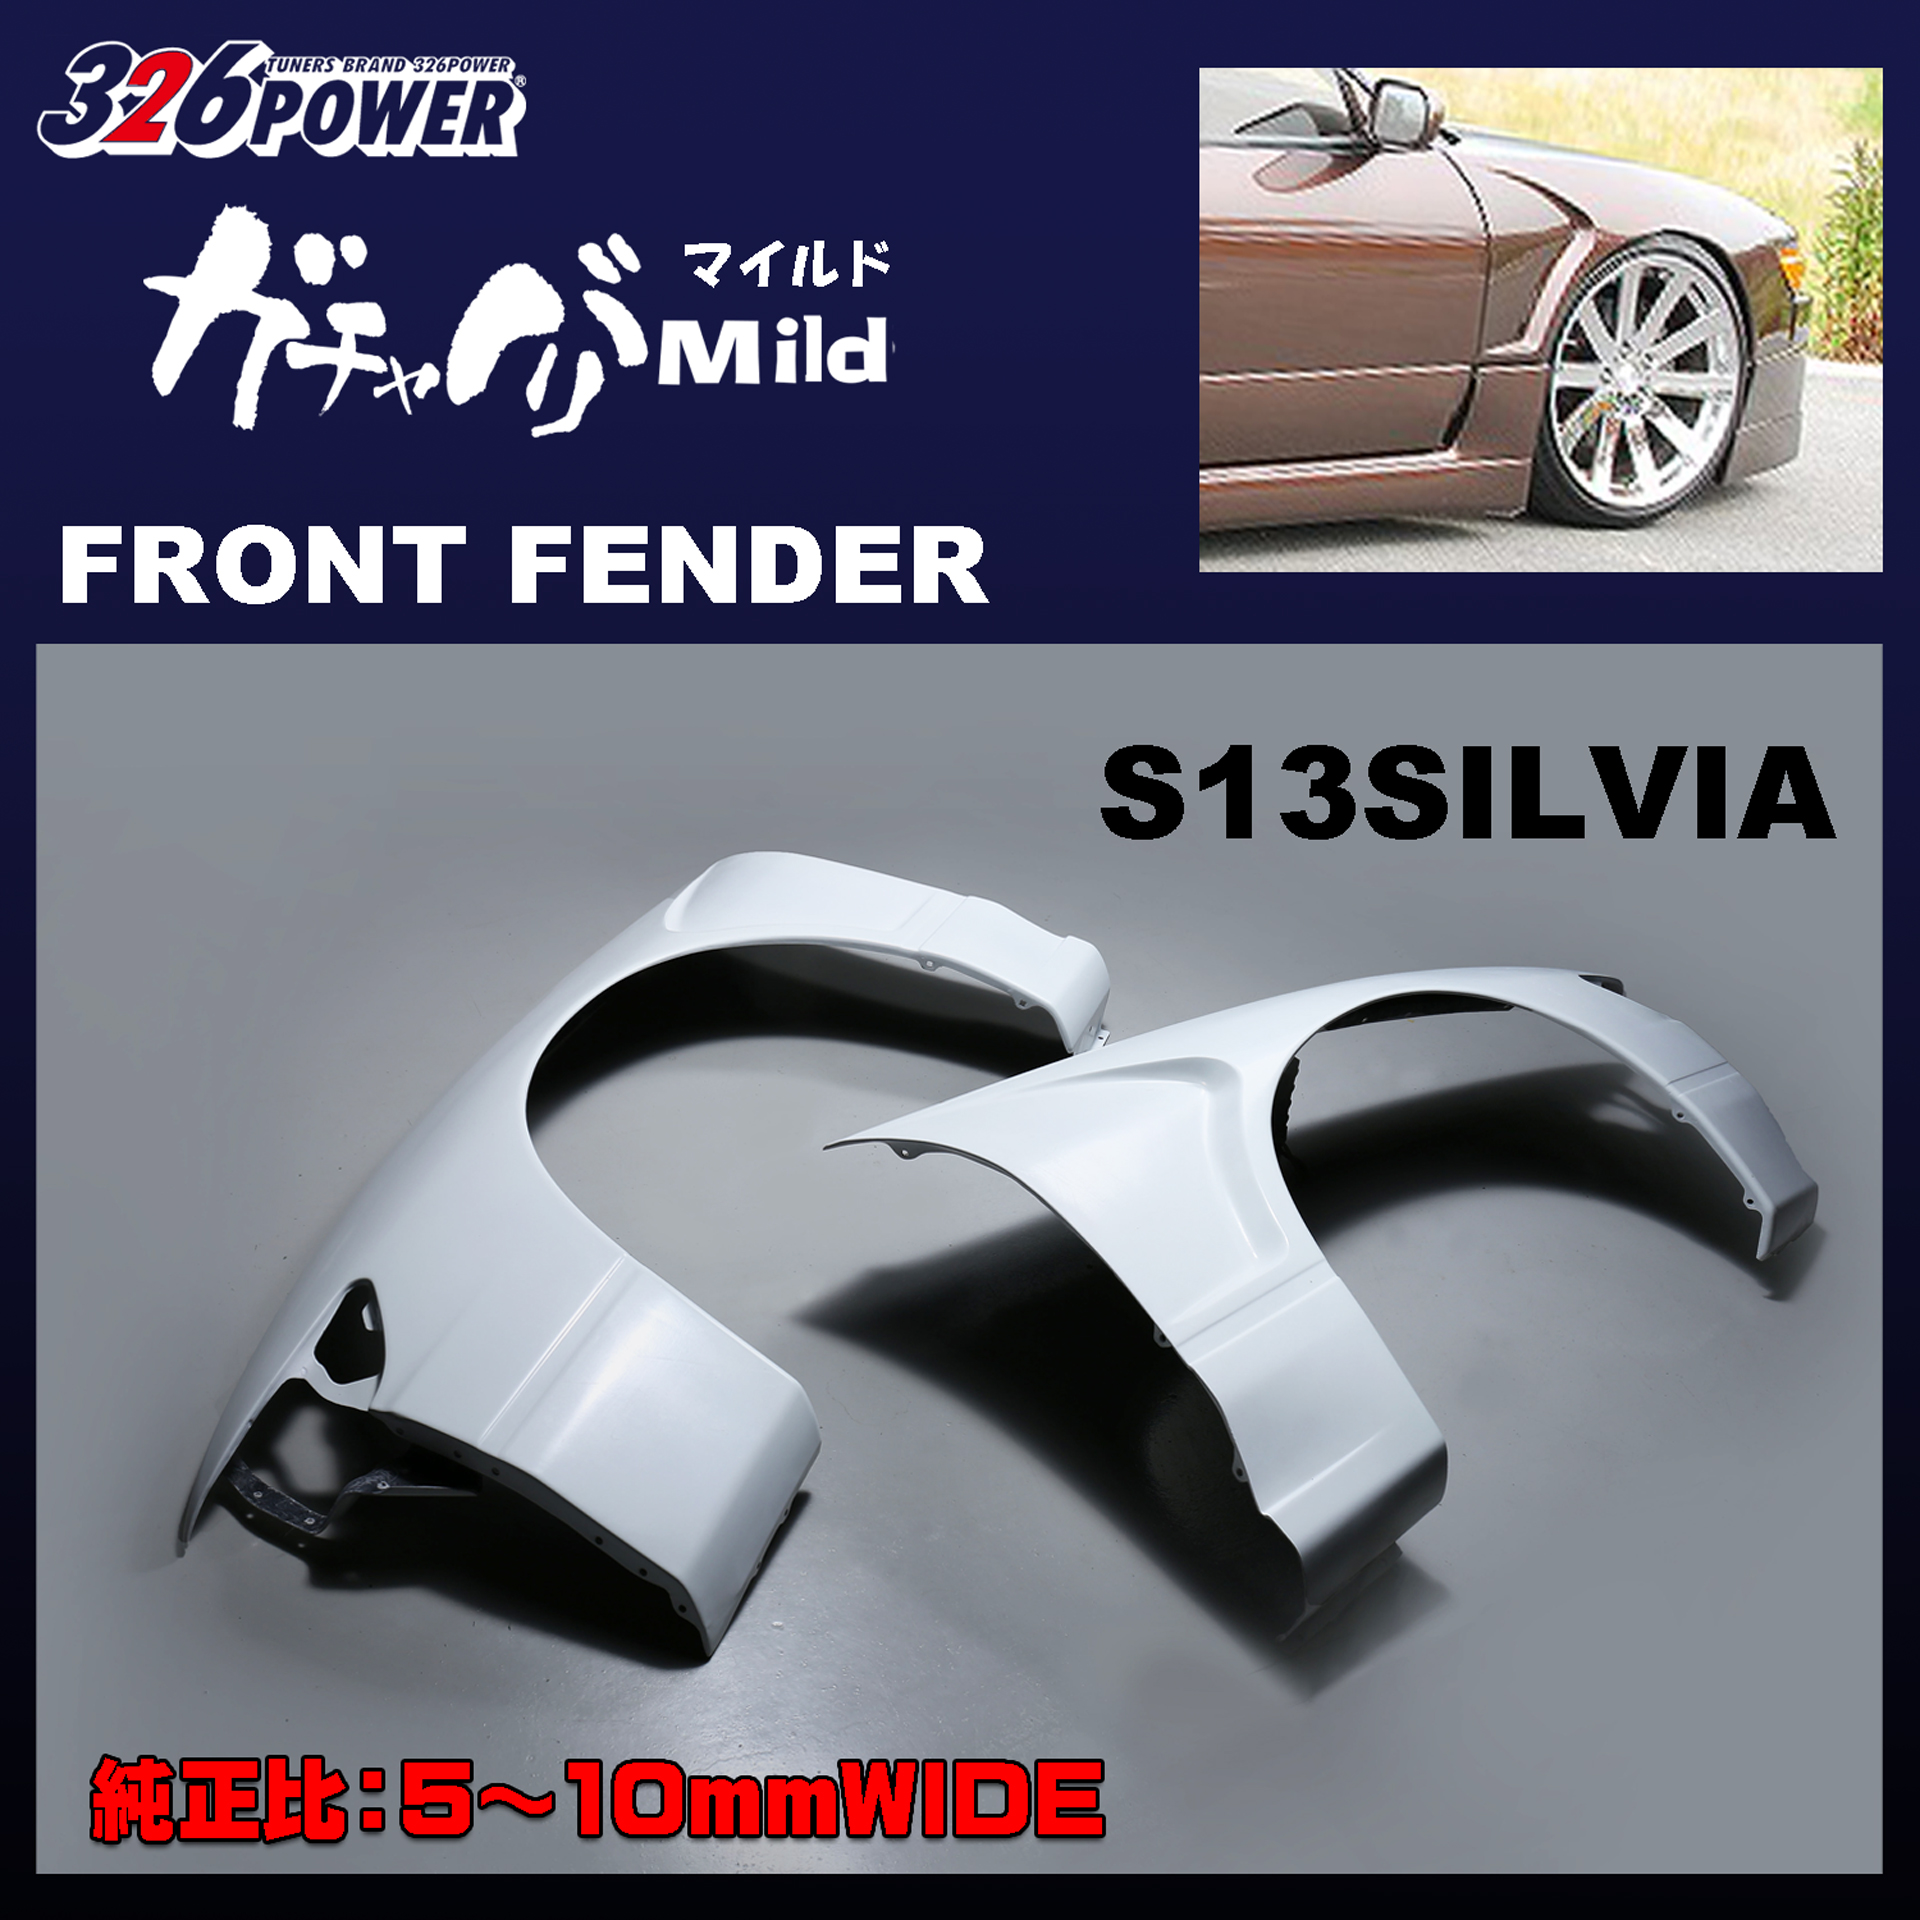 326 Power - Gachabari Mild Front Over Fender - S13 Silvia